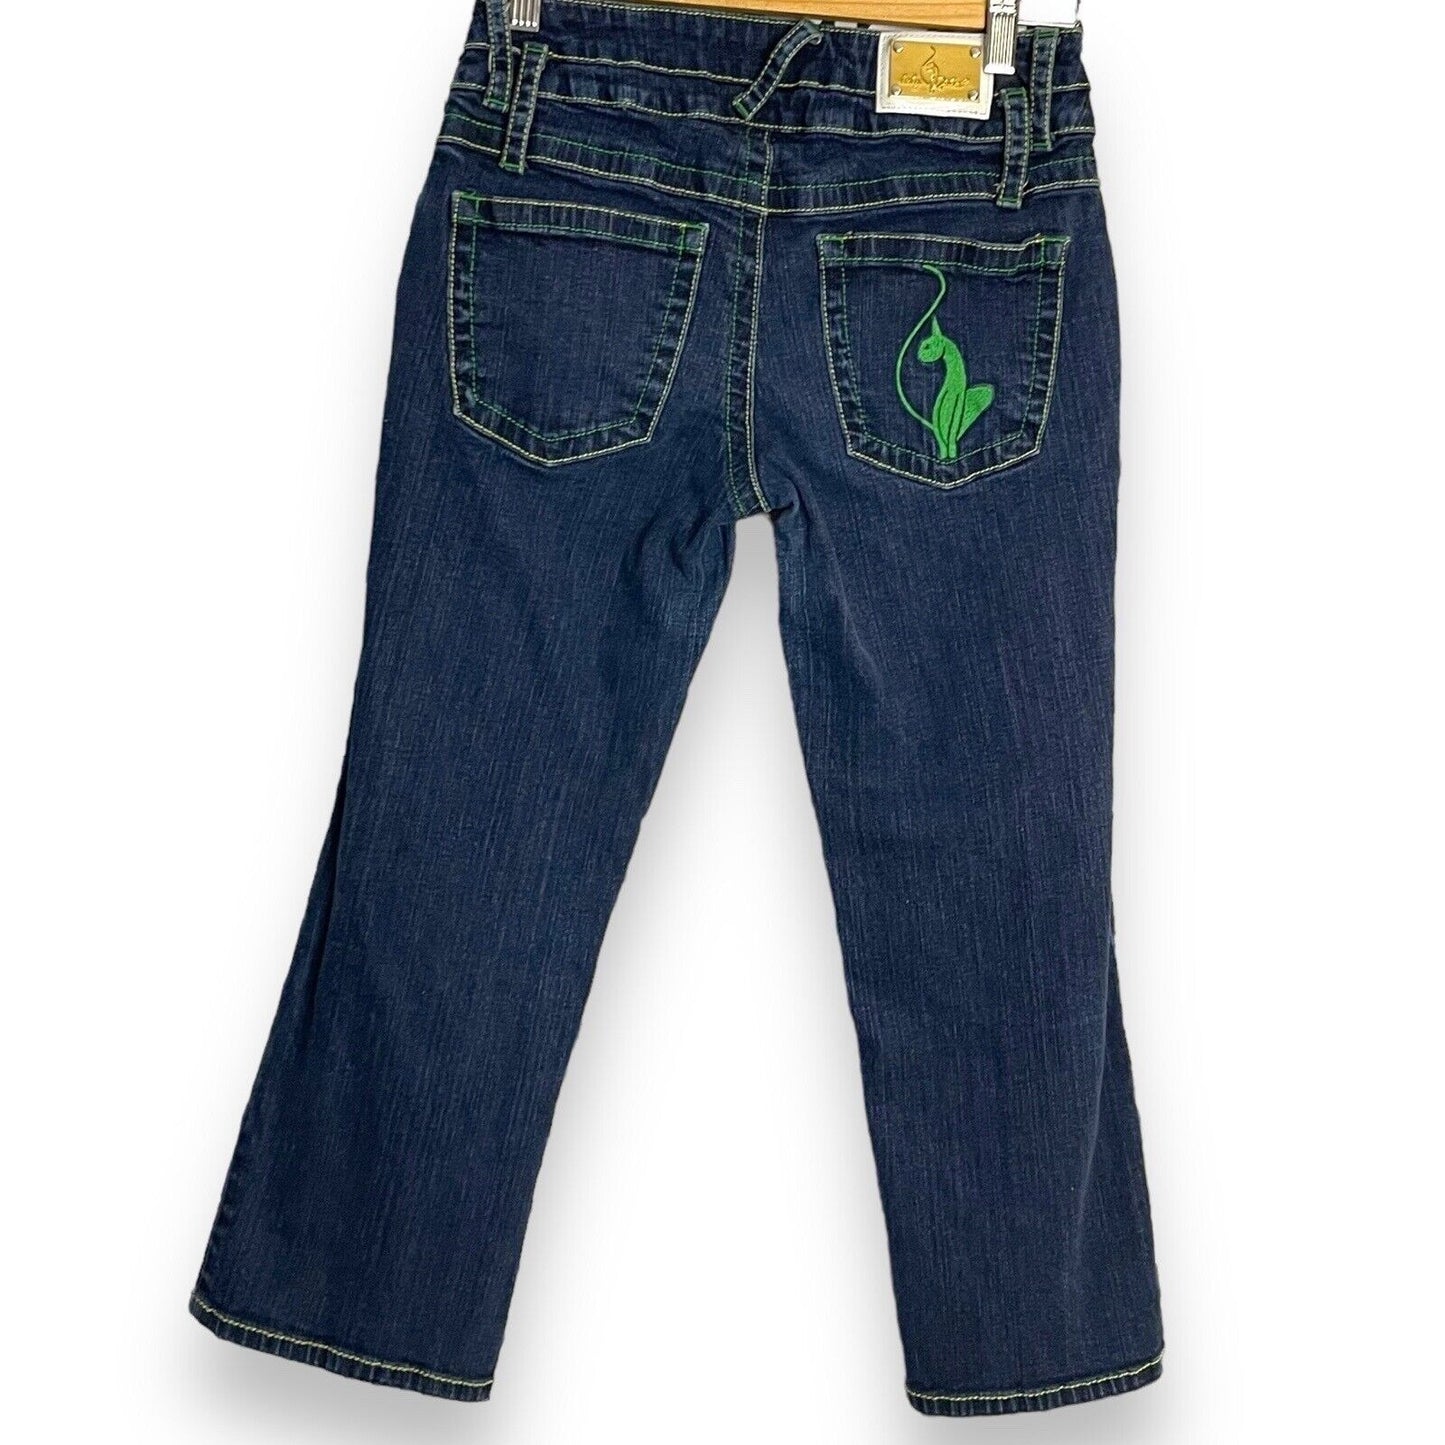 Baby Phat Capri Denim Jeans Women's 5 Blue Embroidered Green Stitching Charm Y2K